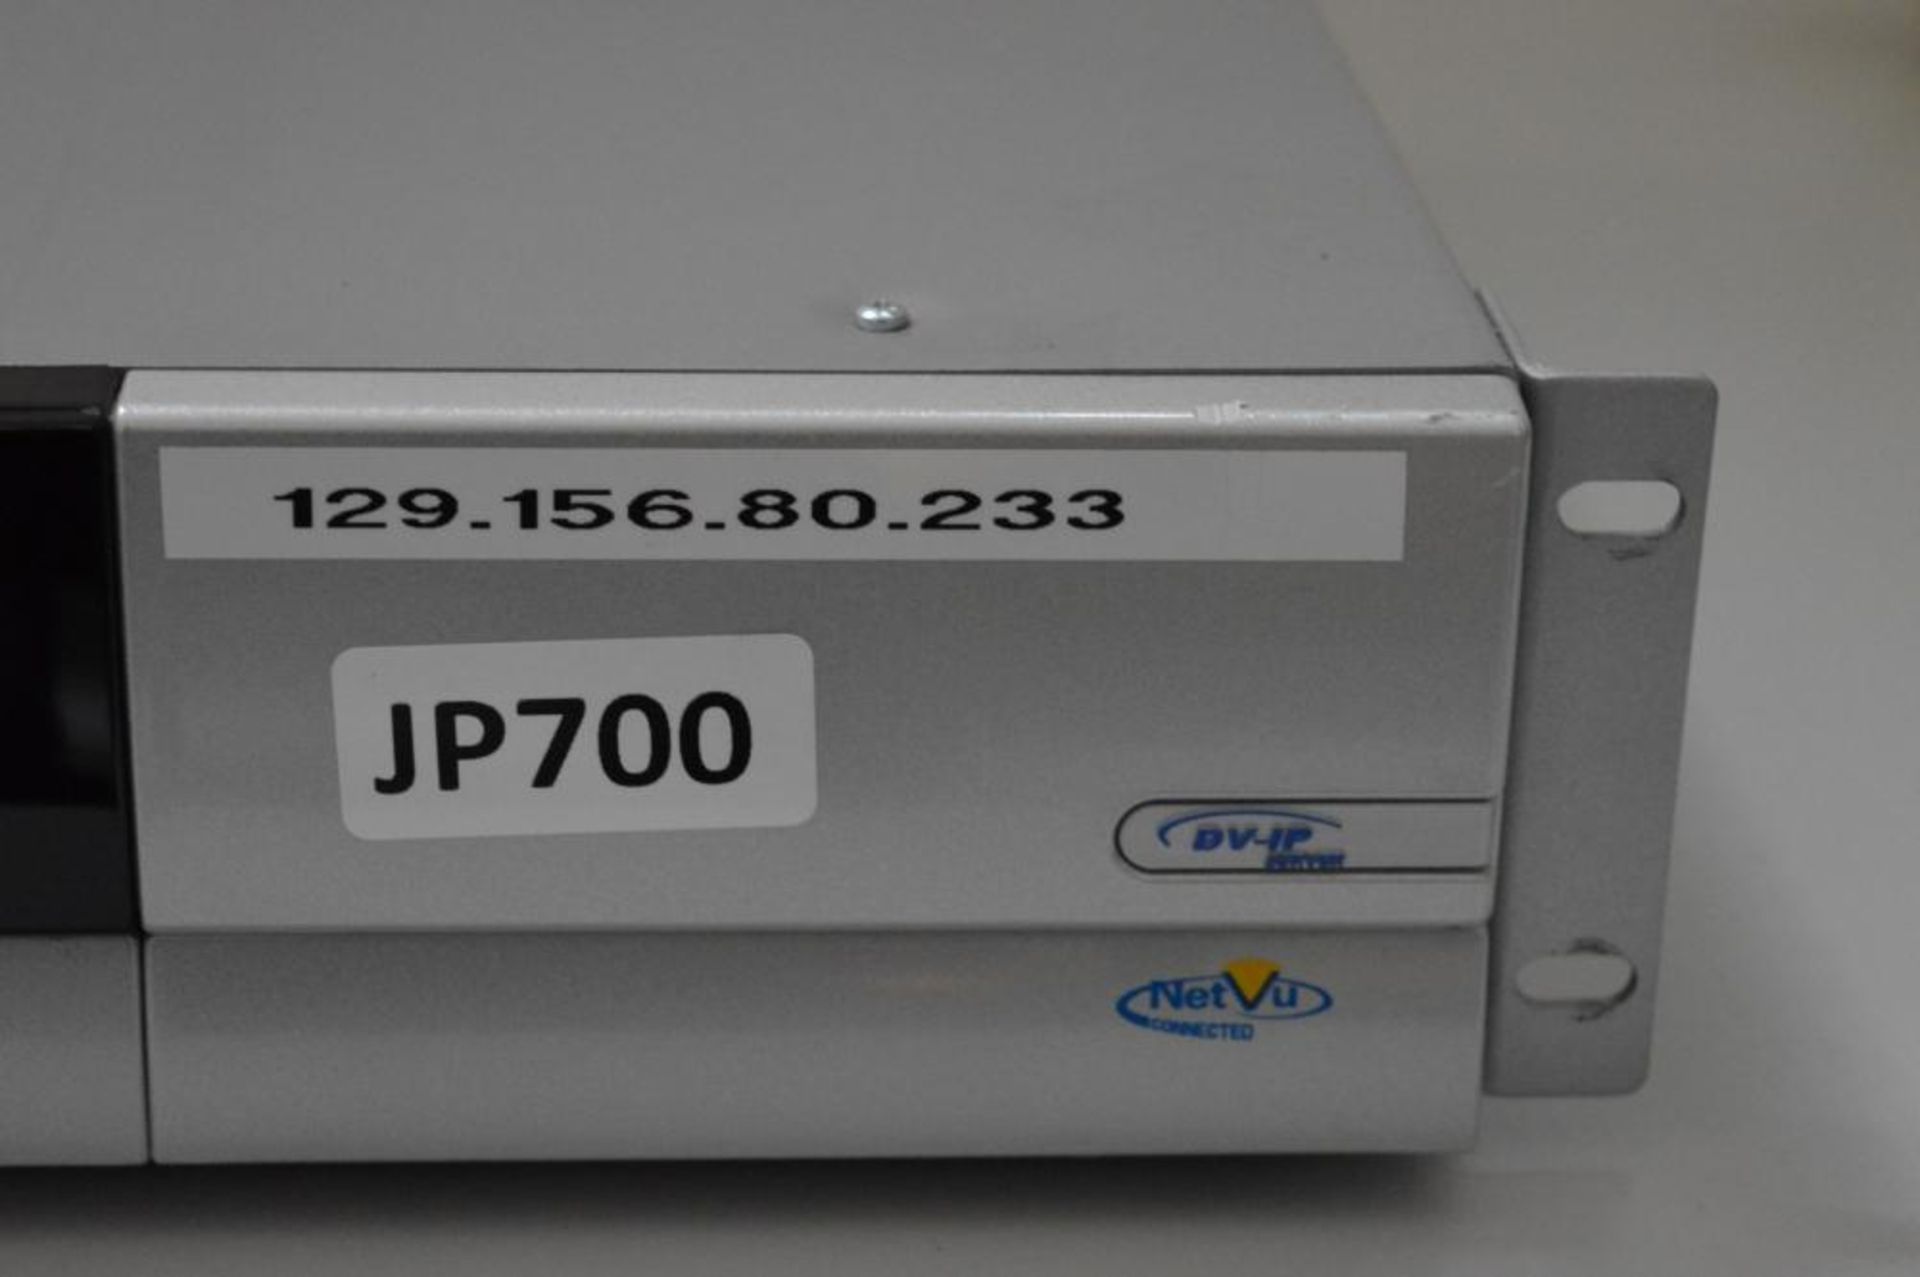 1 x Dedicated Micros CCTV Unit - Model DV-IP16D-600GB - CL270 Ref JP700 - Location: Altrincham WA14 - Image 5 of 5